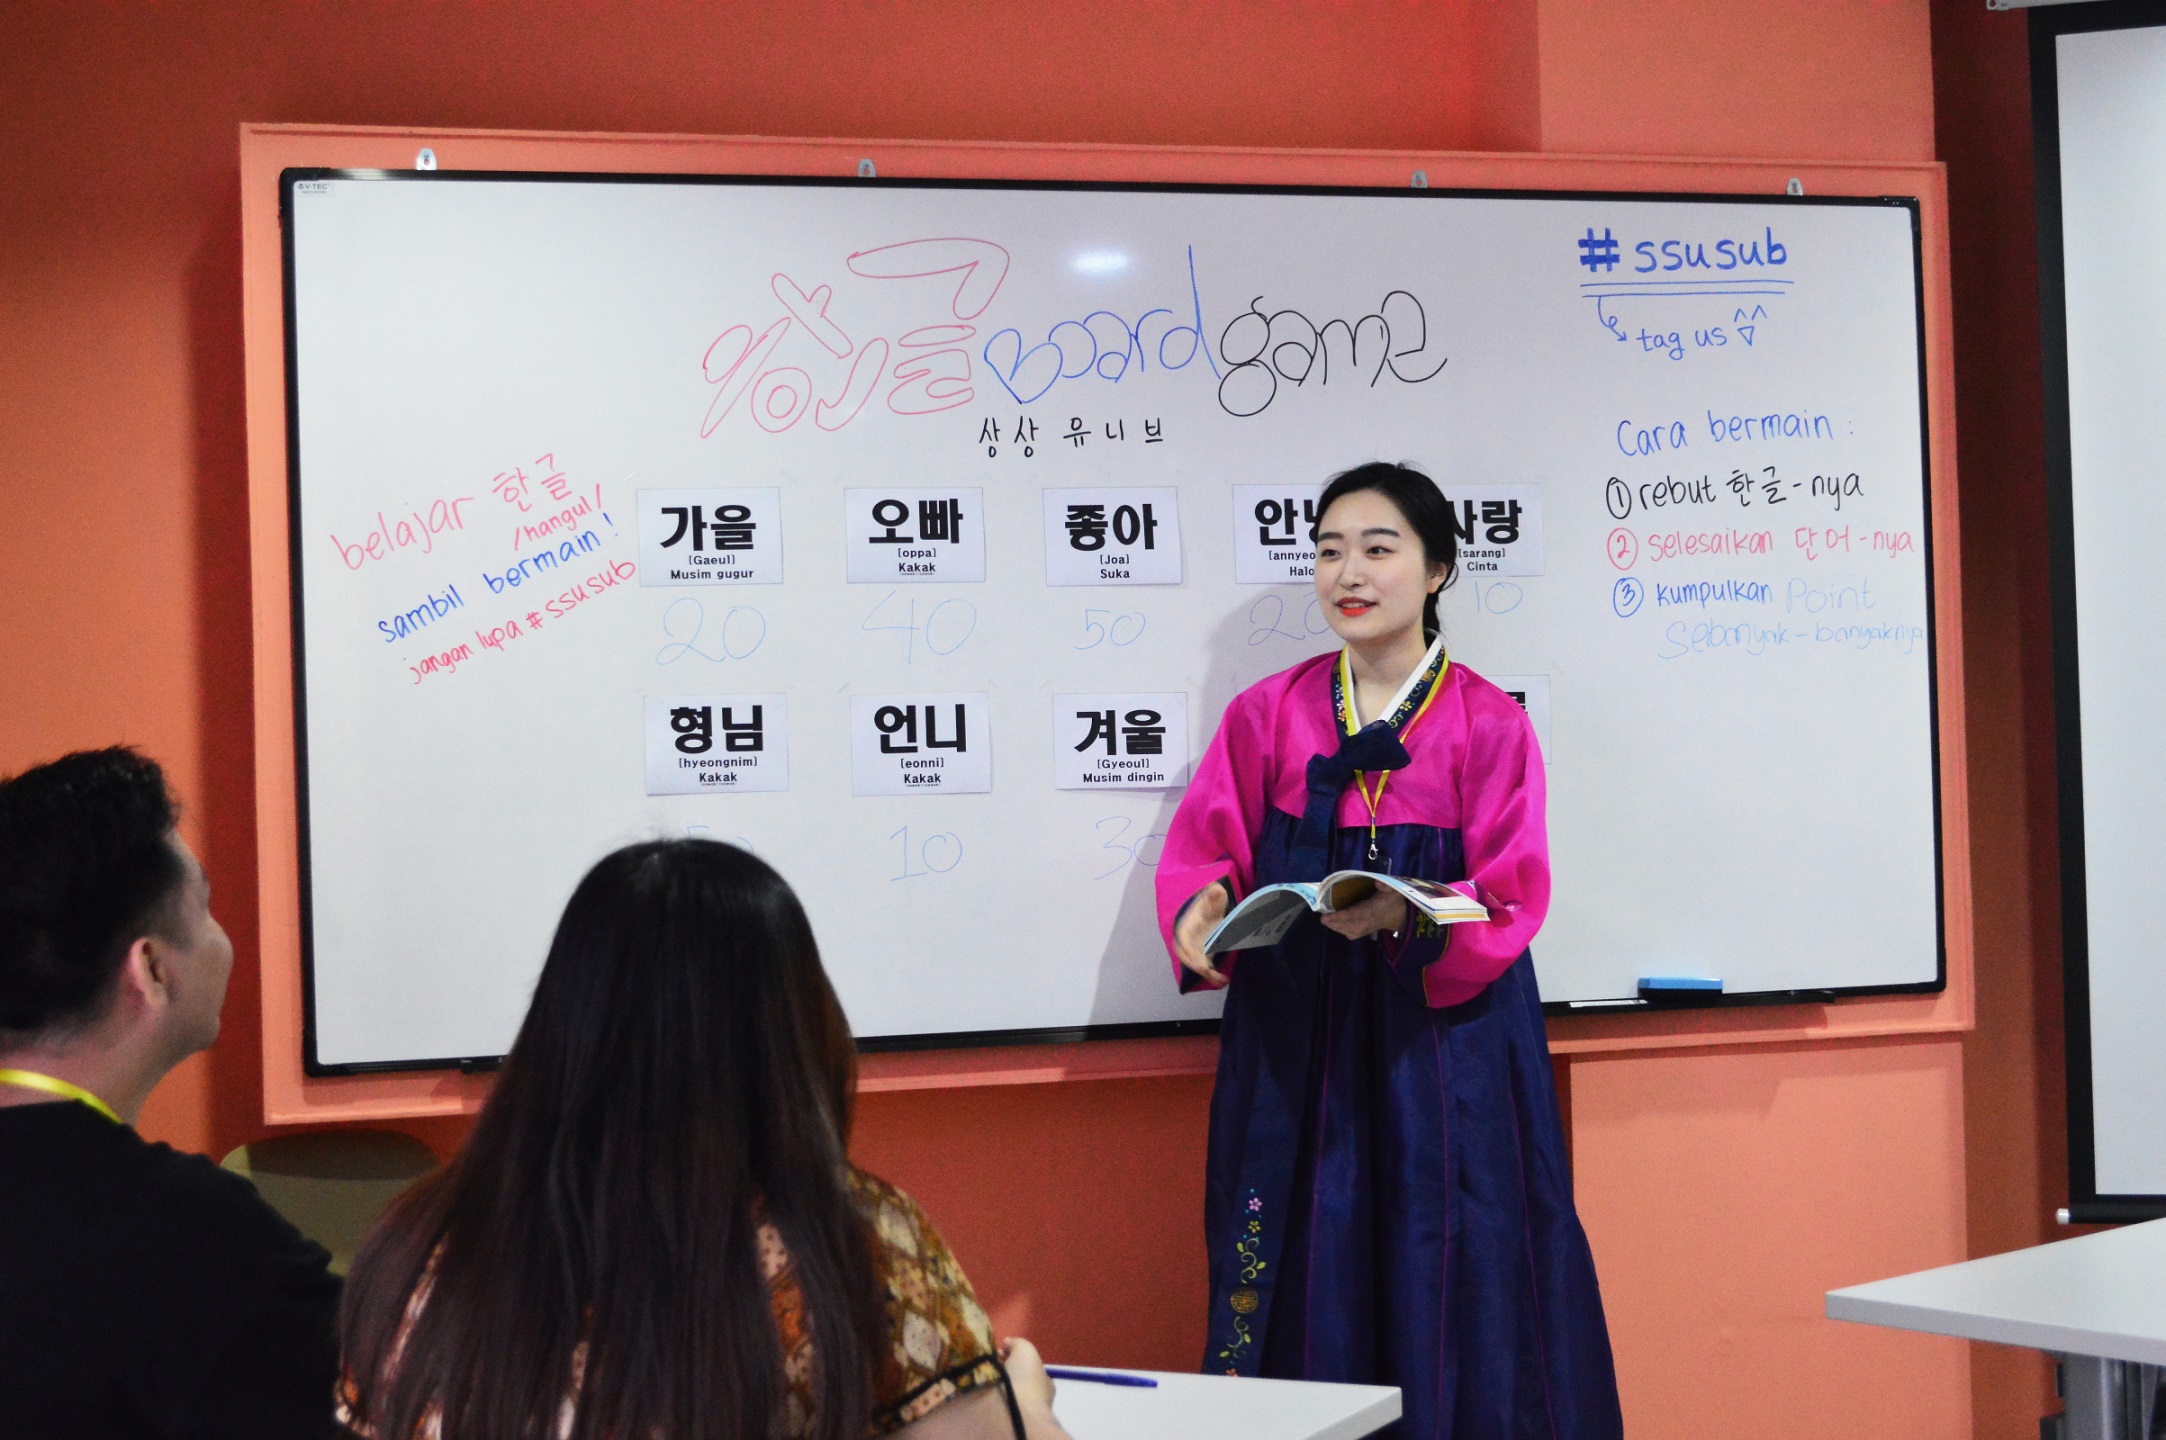 Alasan mengikuti kursus bahasa korea